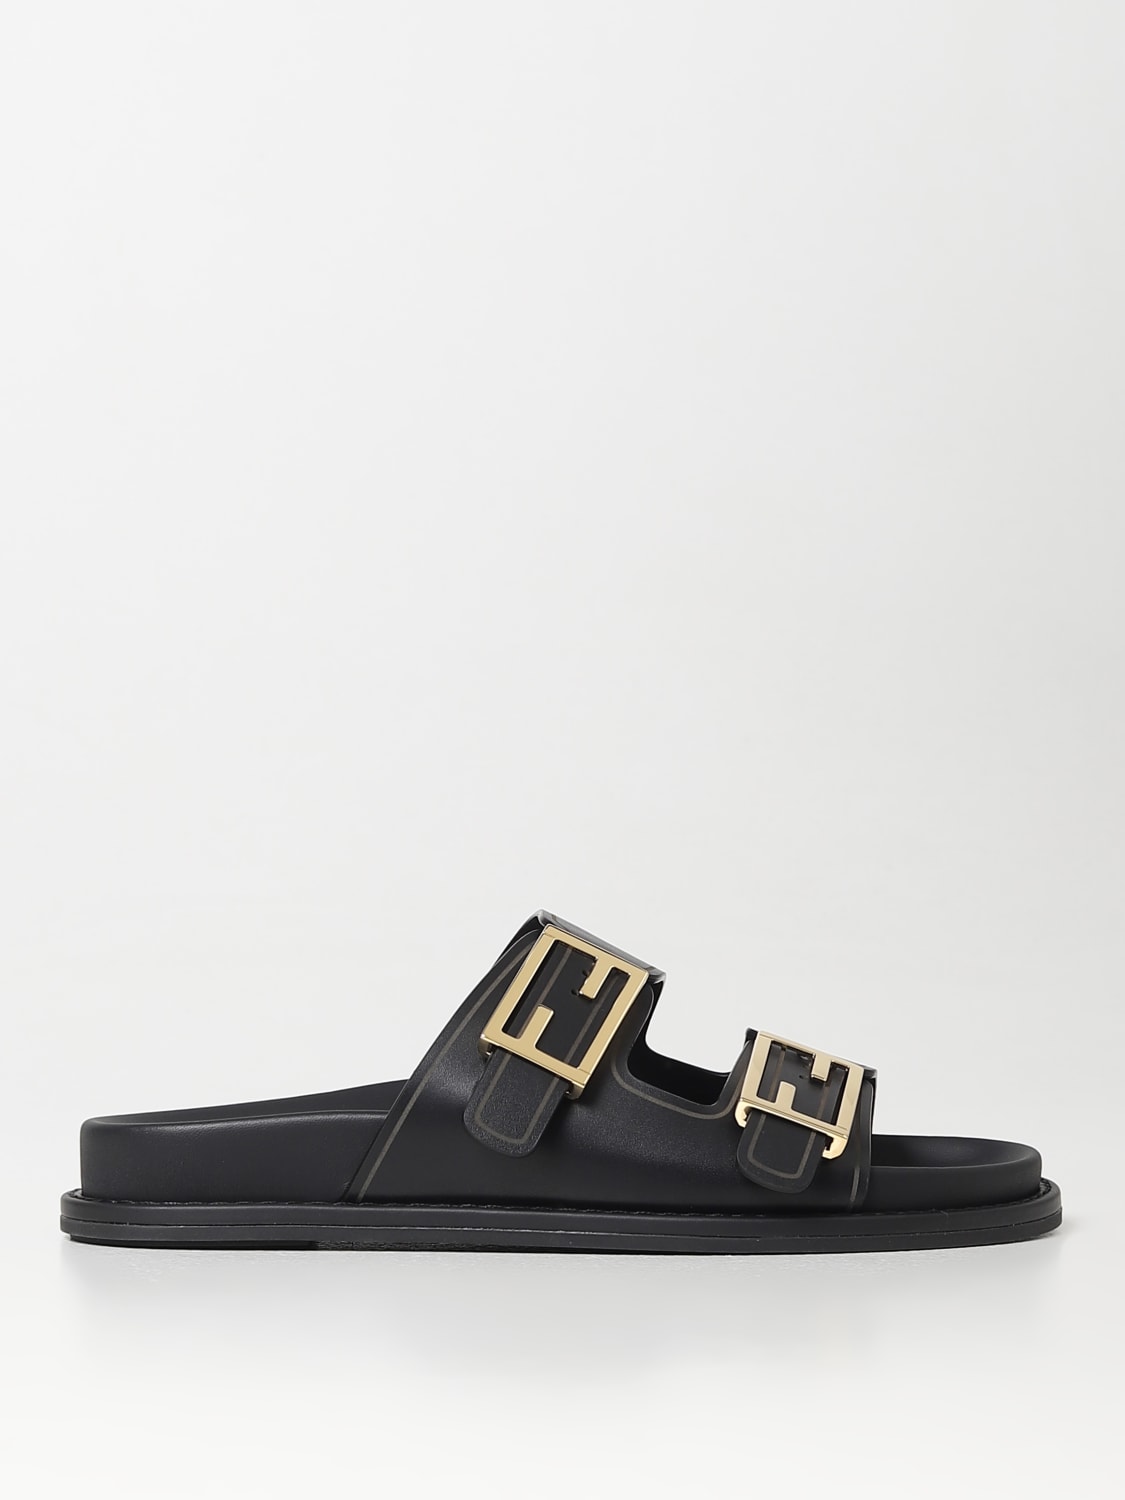 FENDI: Feel sandals in smooth leather - Black | Fendi flat sandals ...